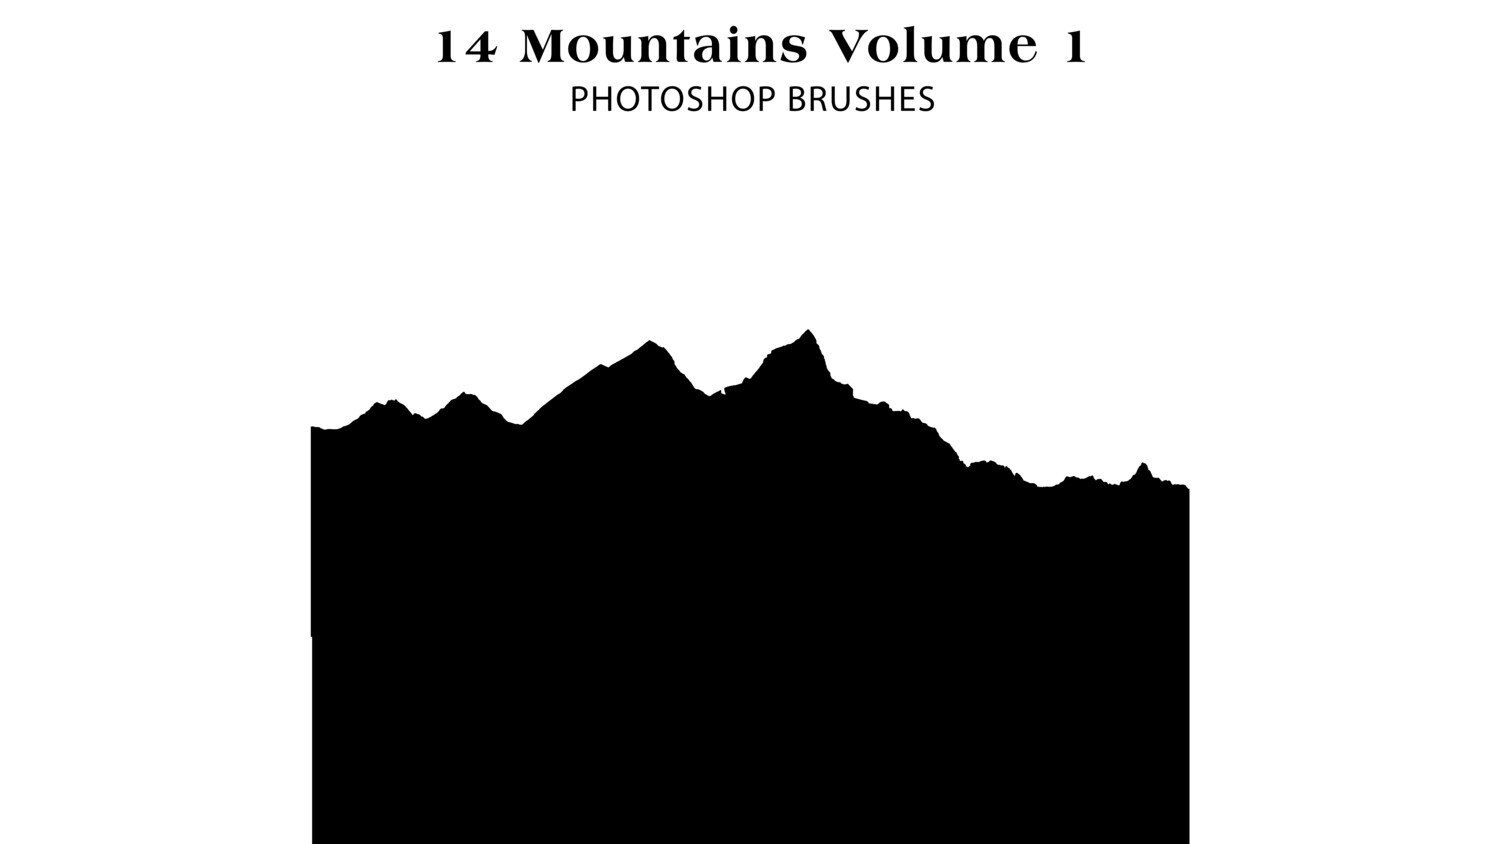 Photoshop Brushes - 14 Mountain Silhouette Brushes Volume 1 , mountains, cliffs, terrain, rocks